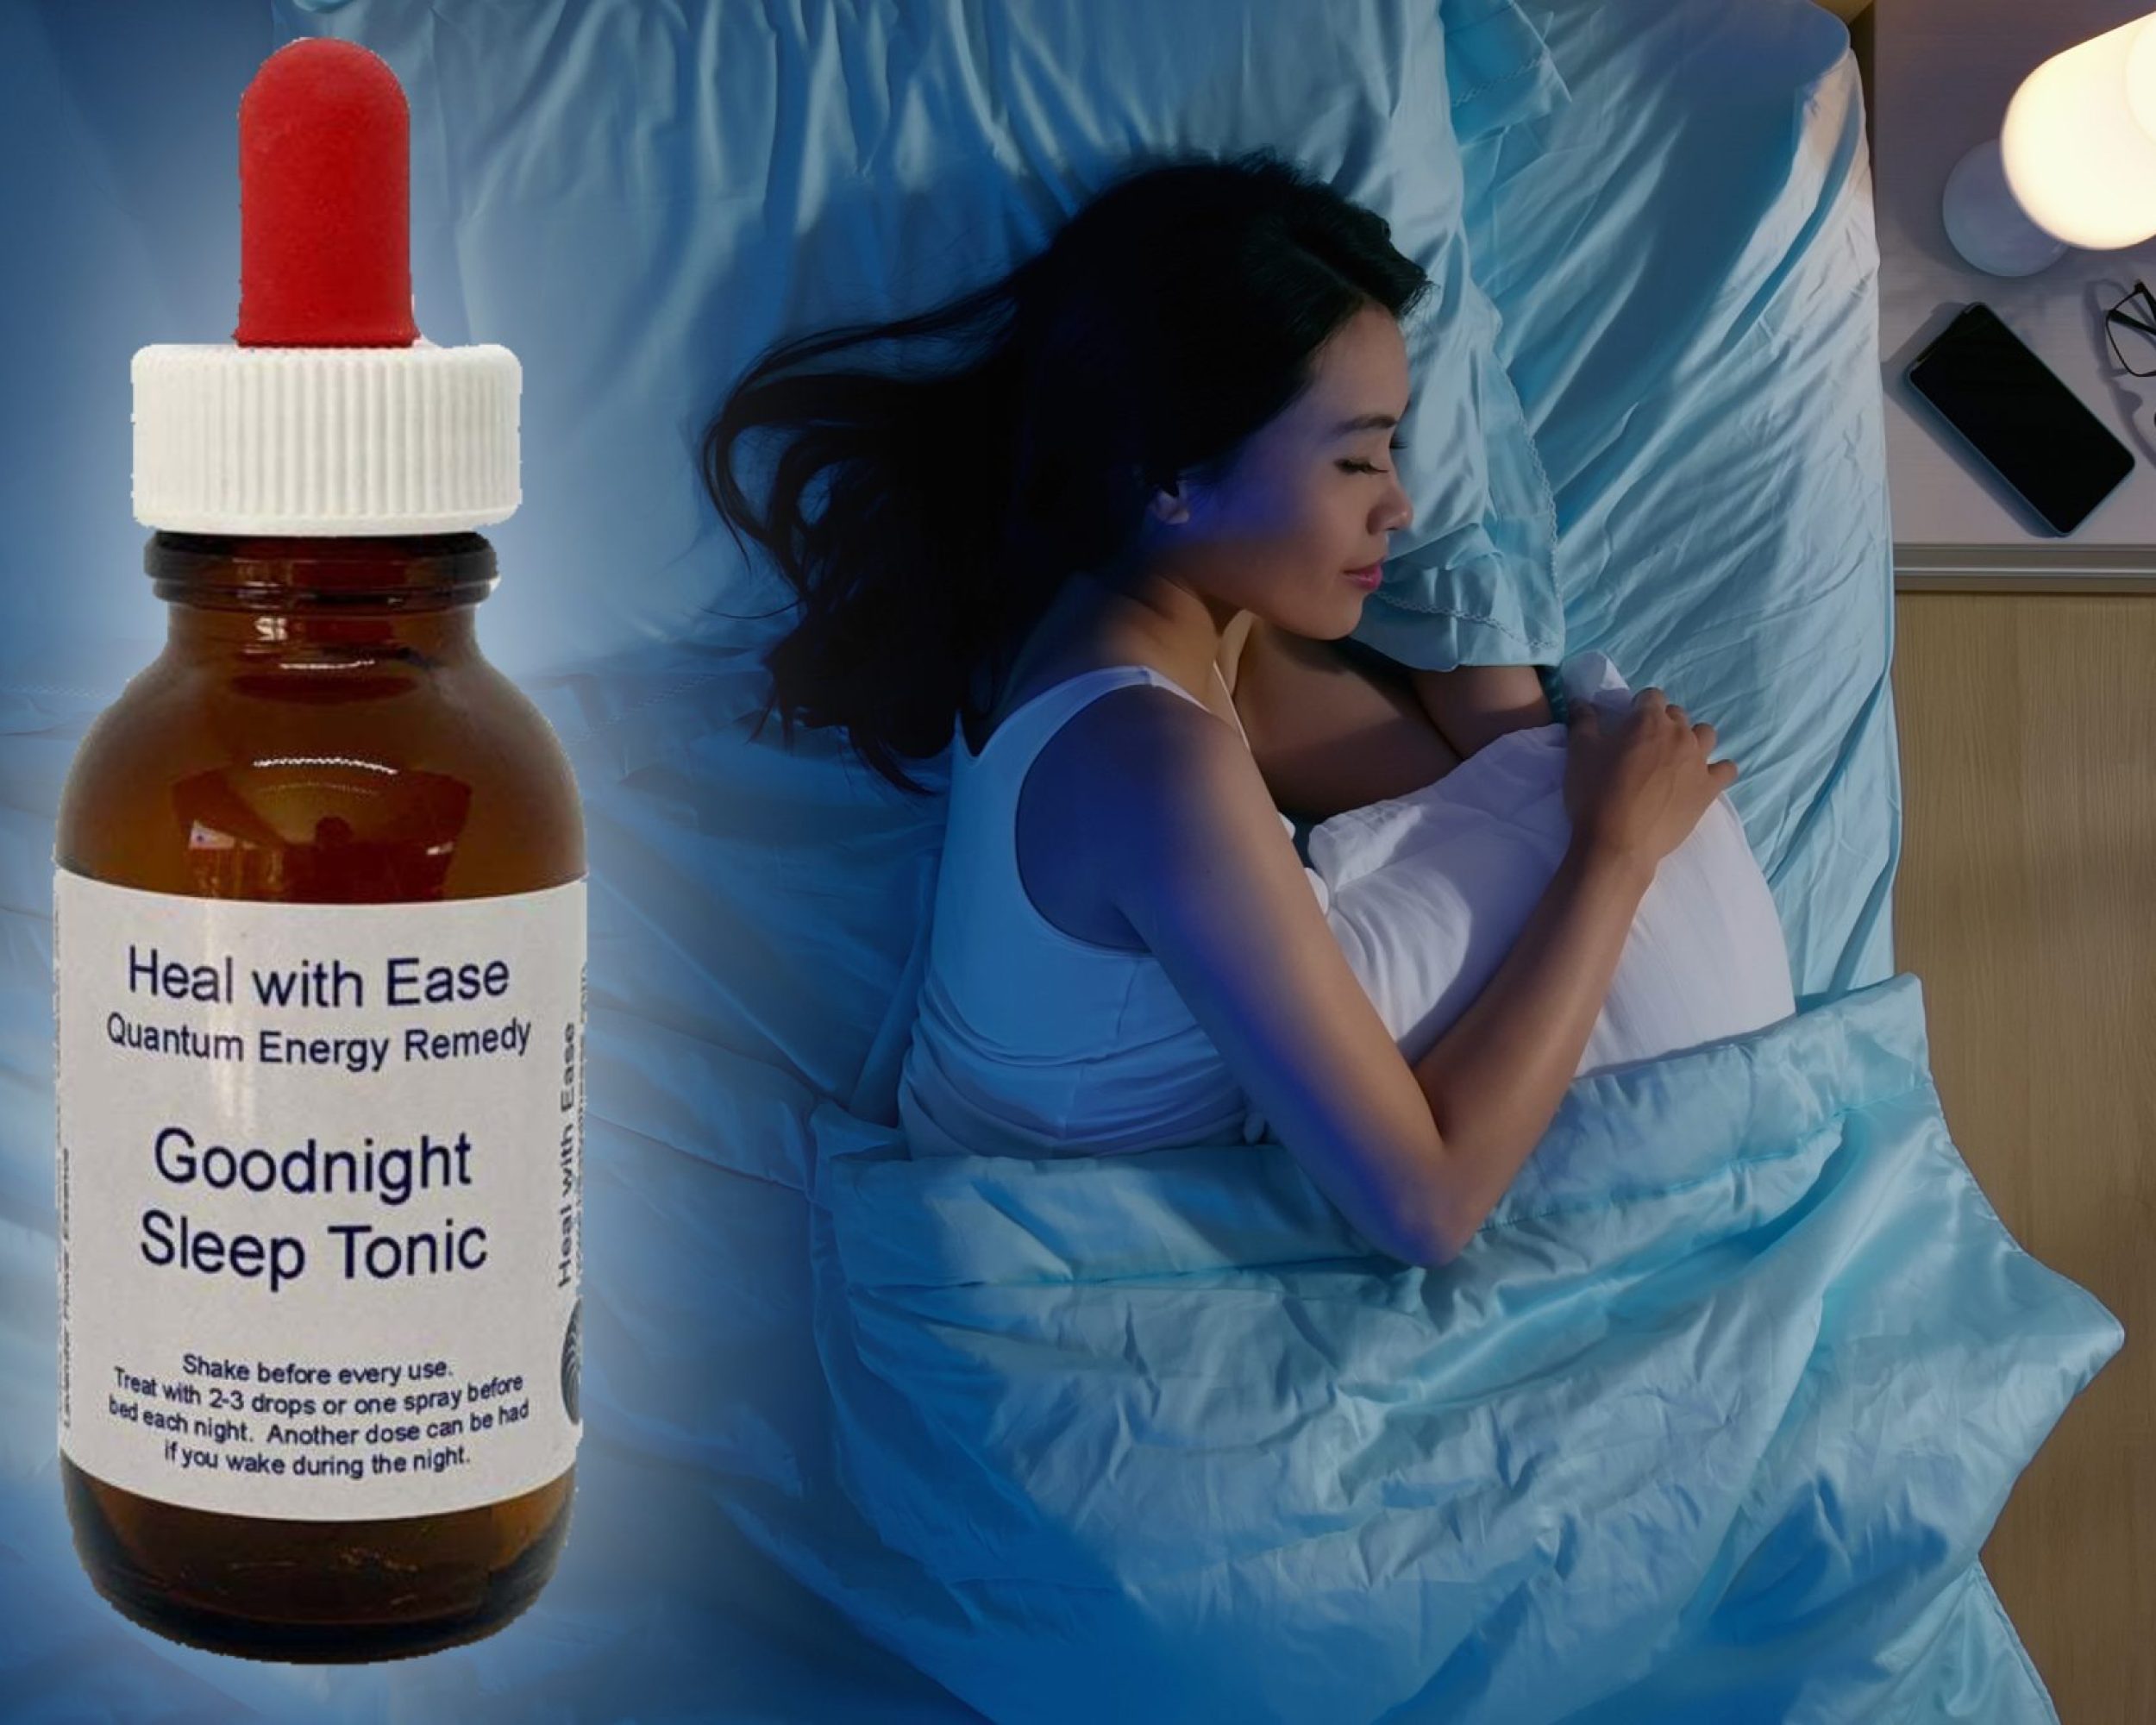 Goodnight Sleep Tonic - New Formula